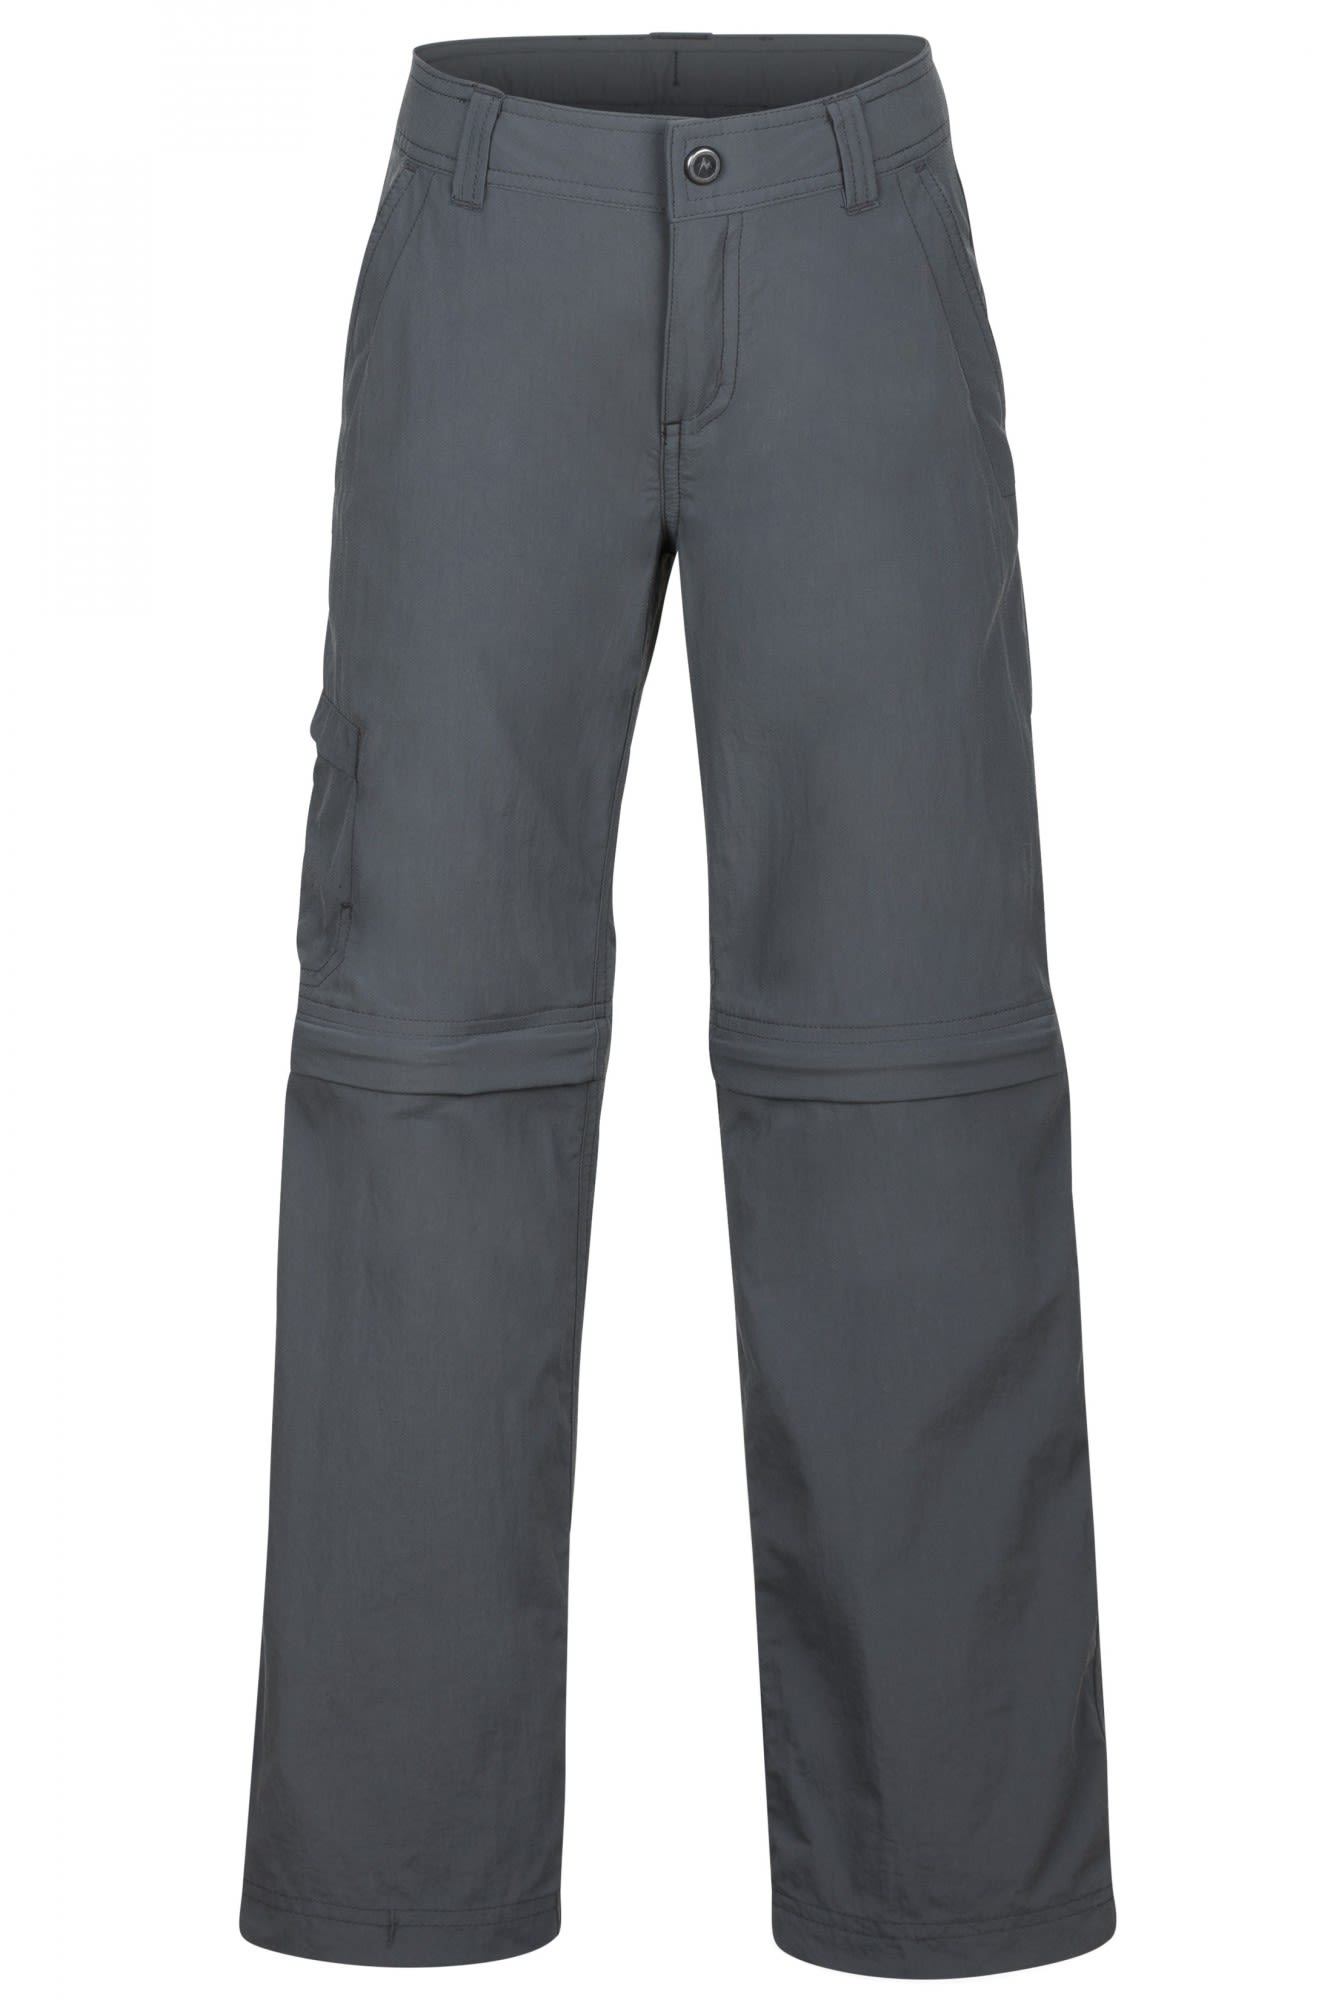 Marmot Boys Cruz Convertible Pant Grau- Male Shorts- Grsse S - Farbe Slate Grey unter Marmot